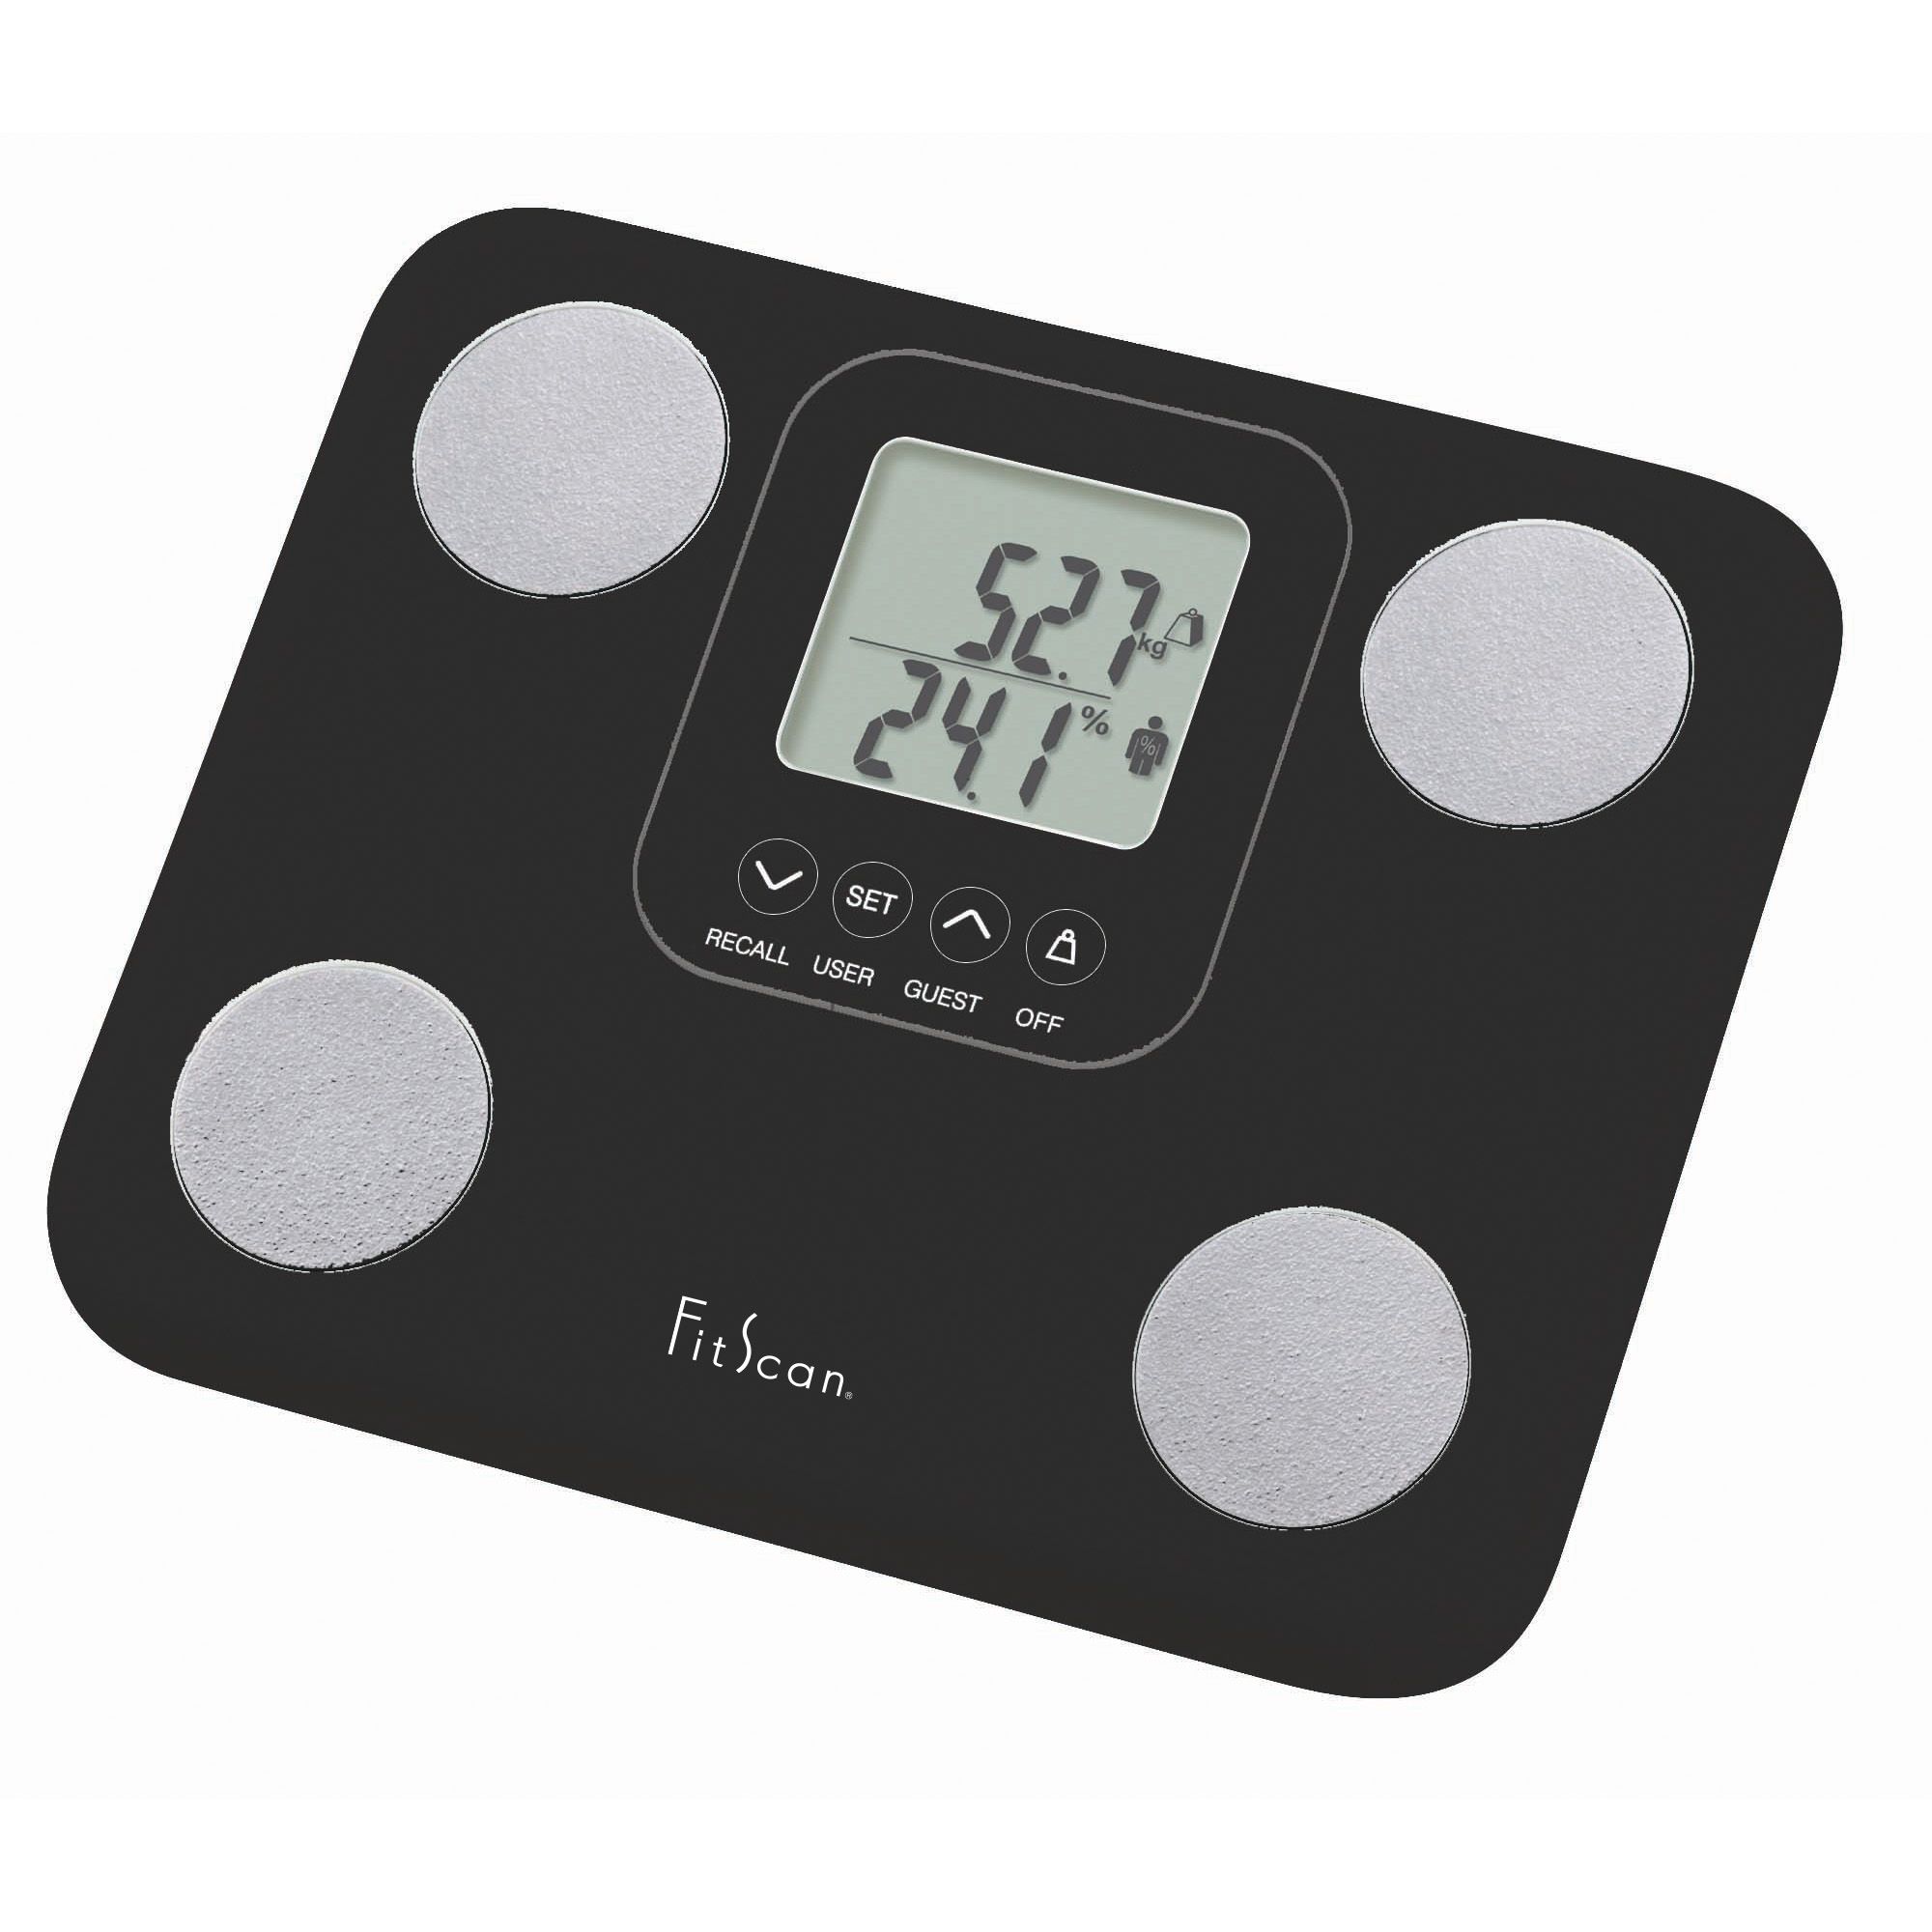 Tanita FitScan BC-401F Bluetooth Body Composition Monitor